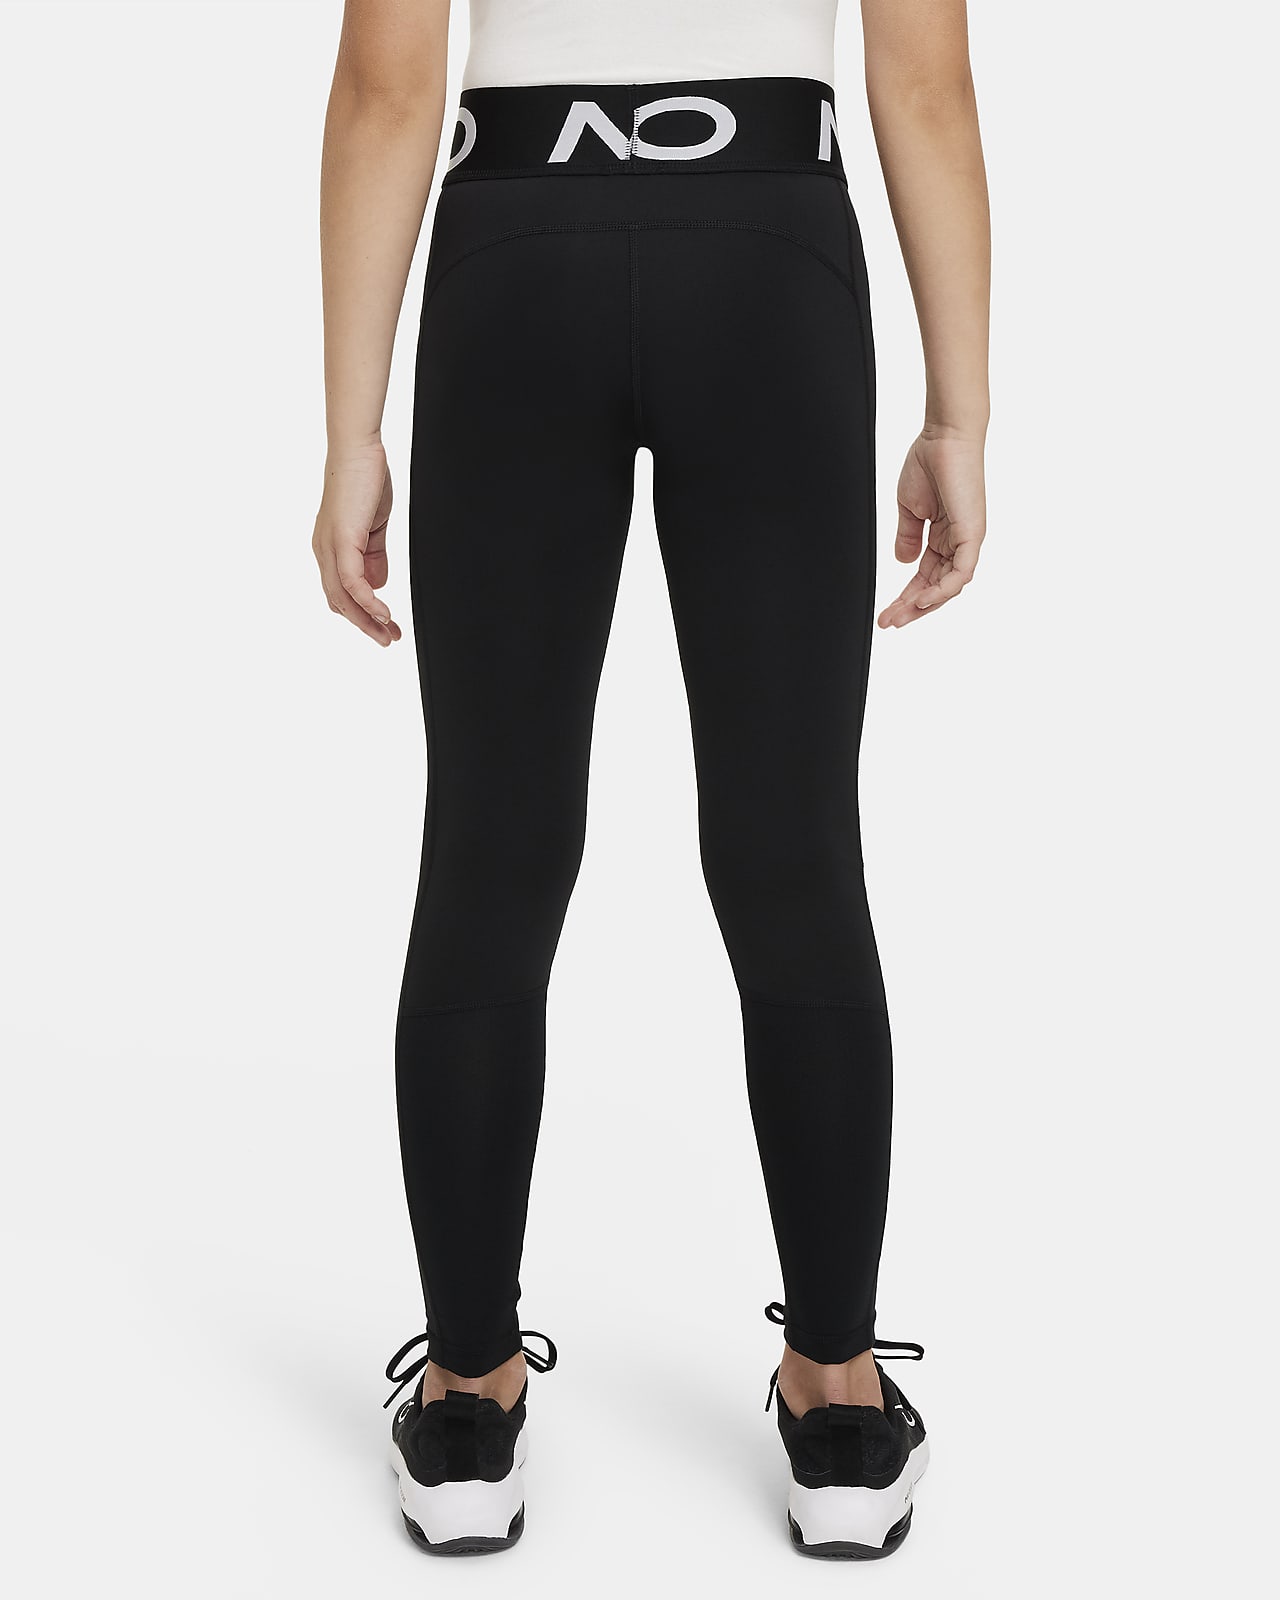 Spodnie Leginsy Termoaktywne Nike Pro Dri-FIT 3/4 Tight DD1919-010 73289